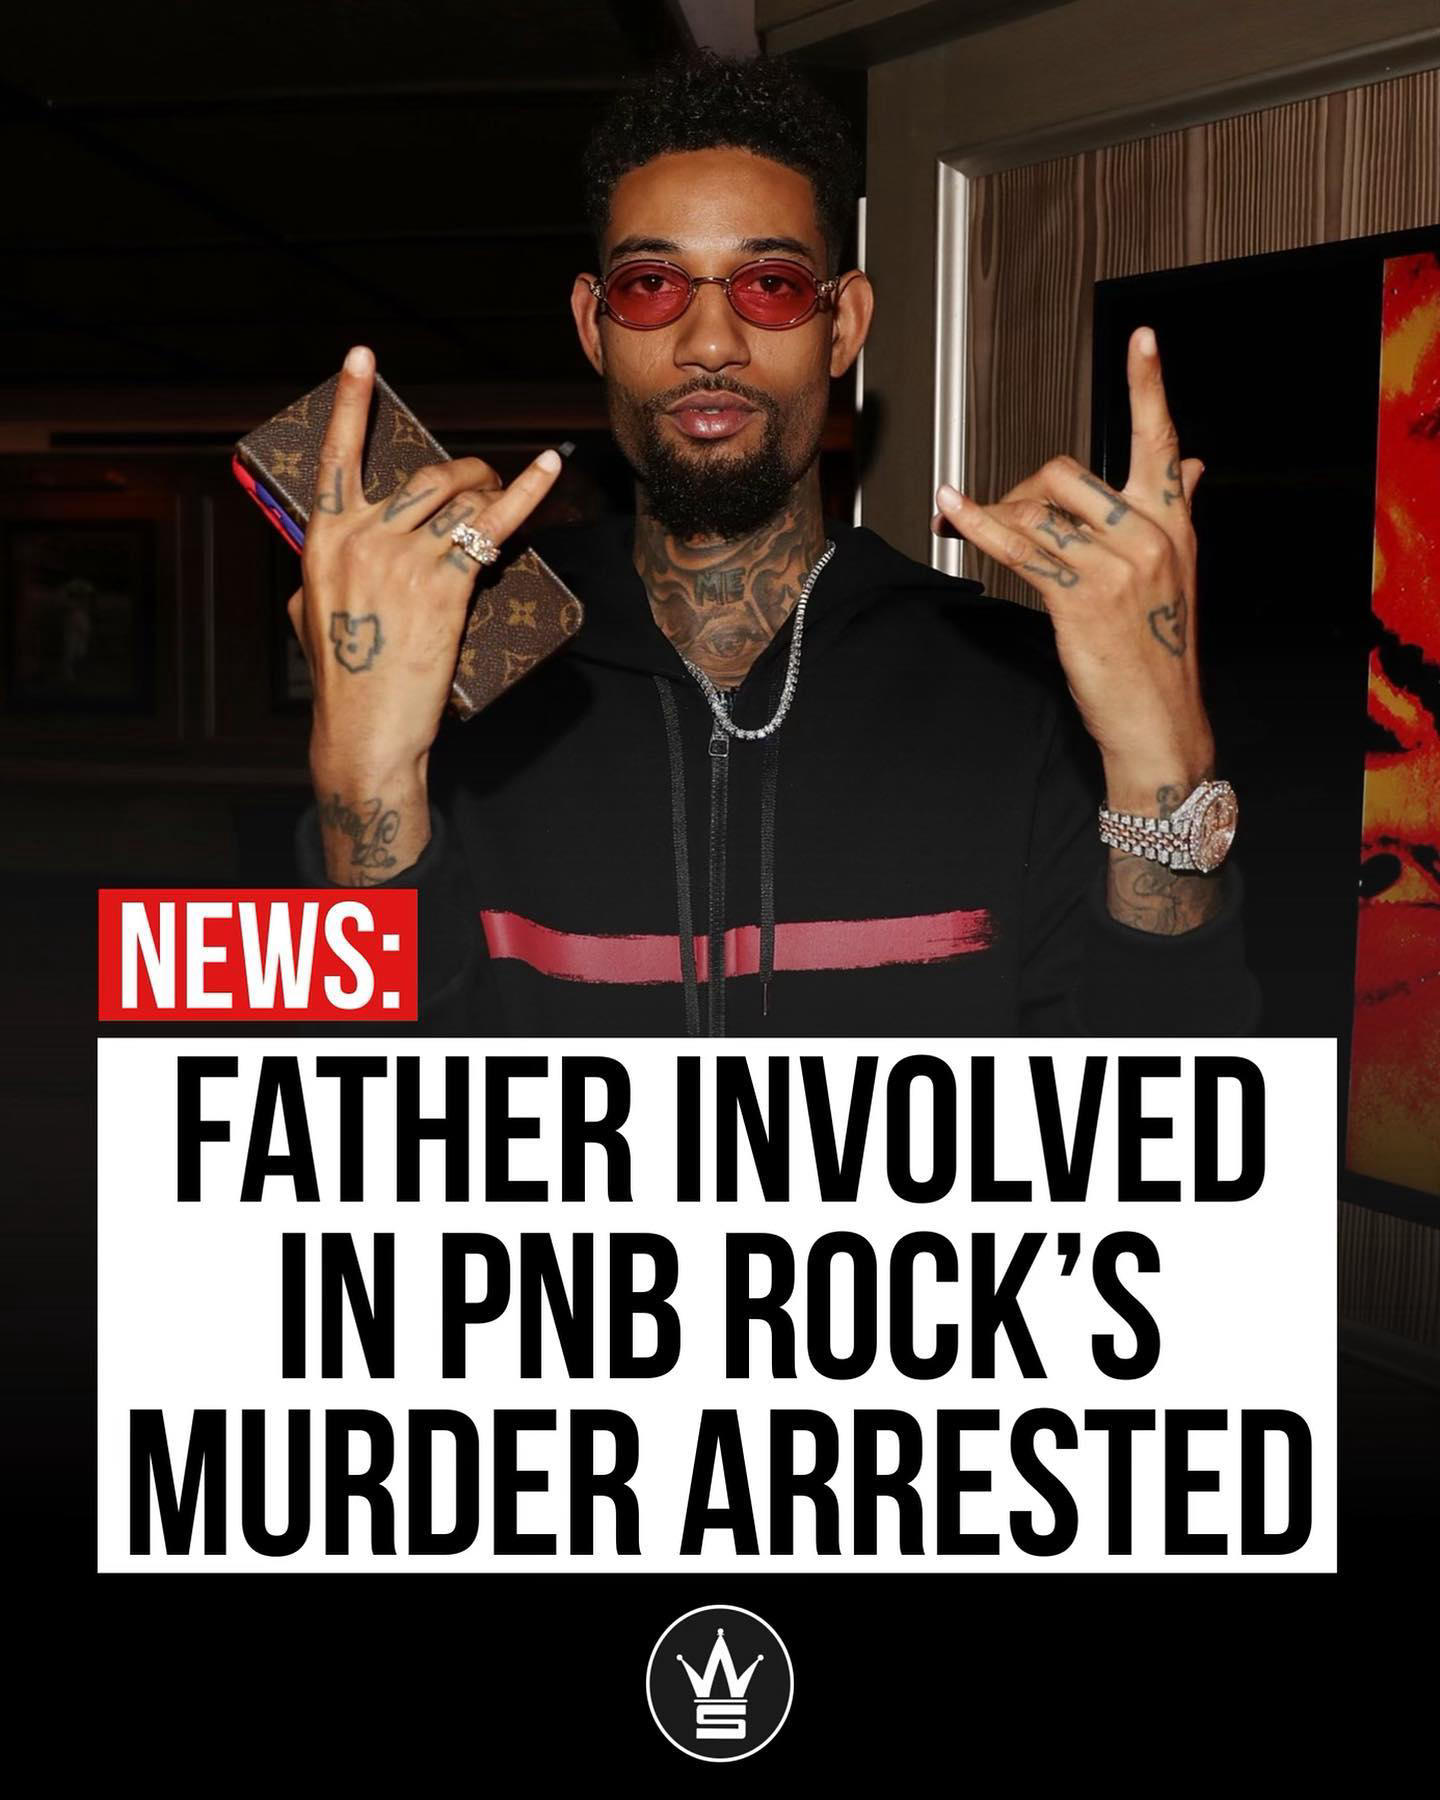 WorldStar Hip Hop / WSHH - According to reports, #PnBRock murder suspect Freddie Lee Trone has been